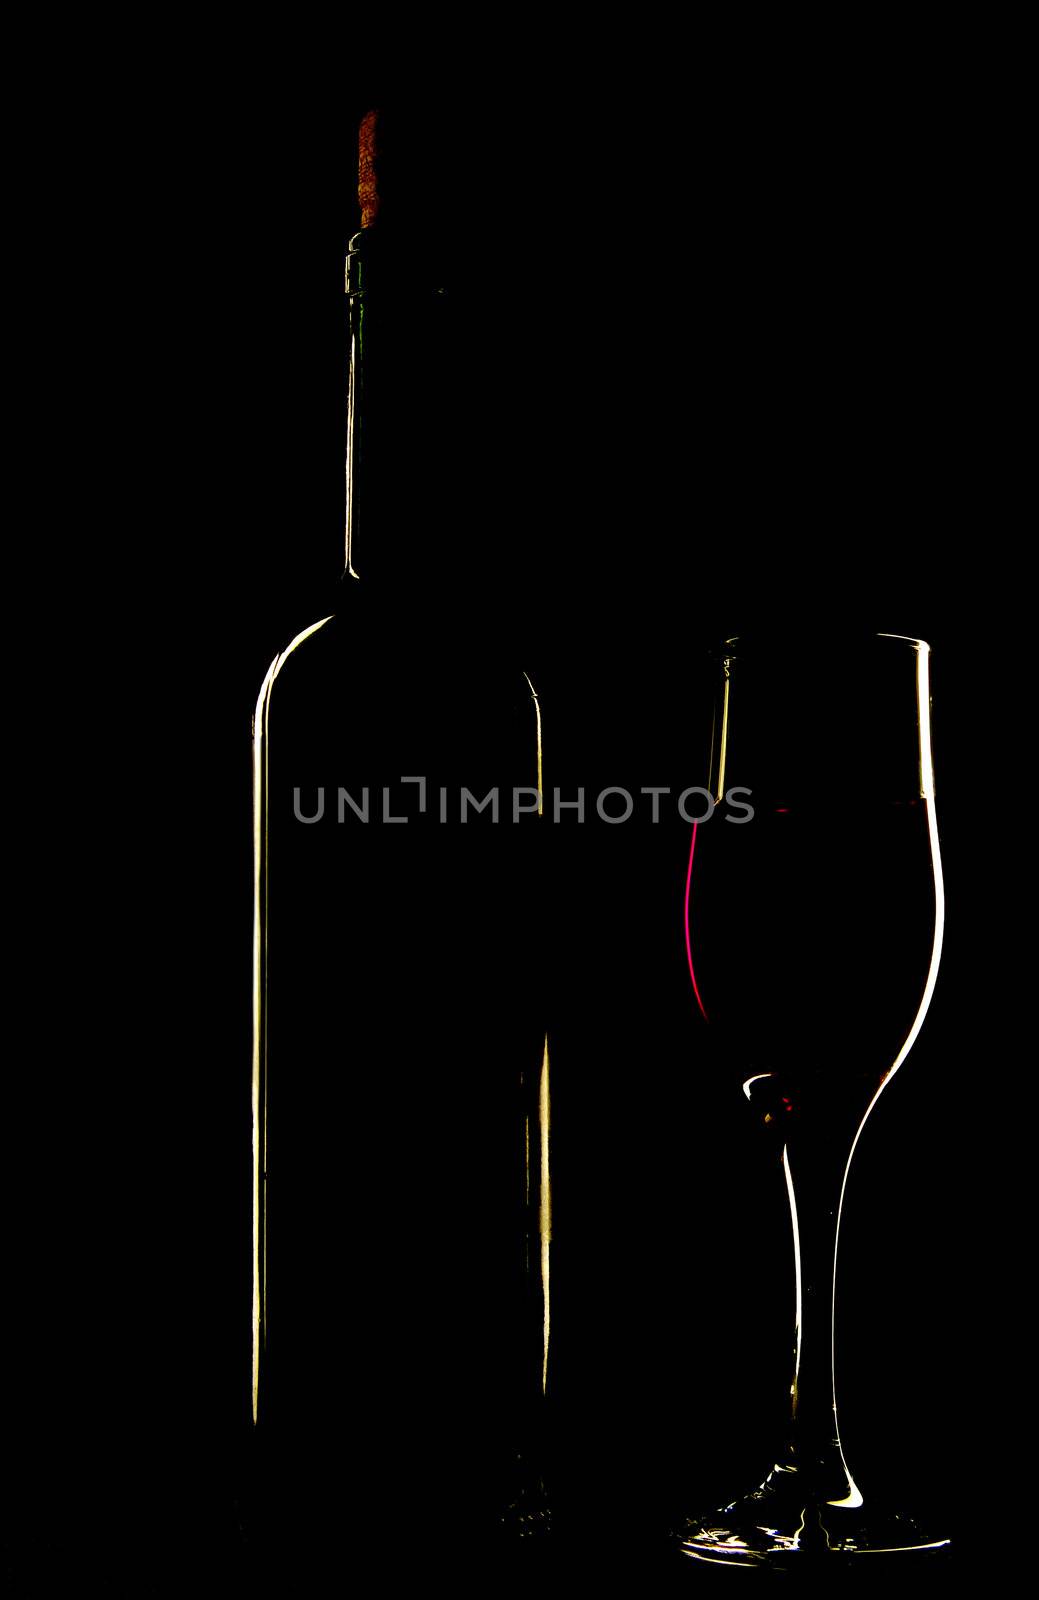 light silhouette of bottle and wineglass by palomnik